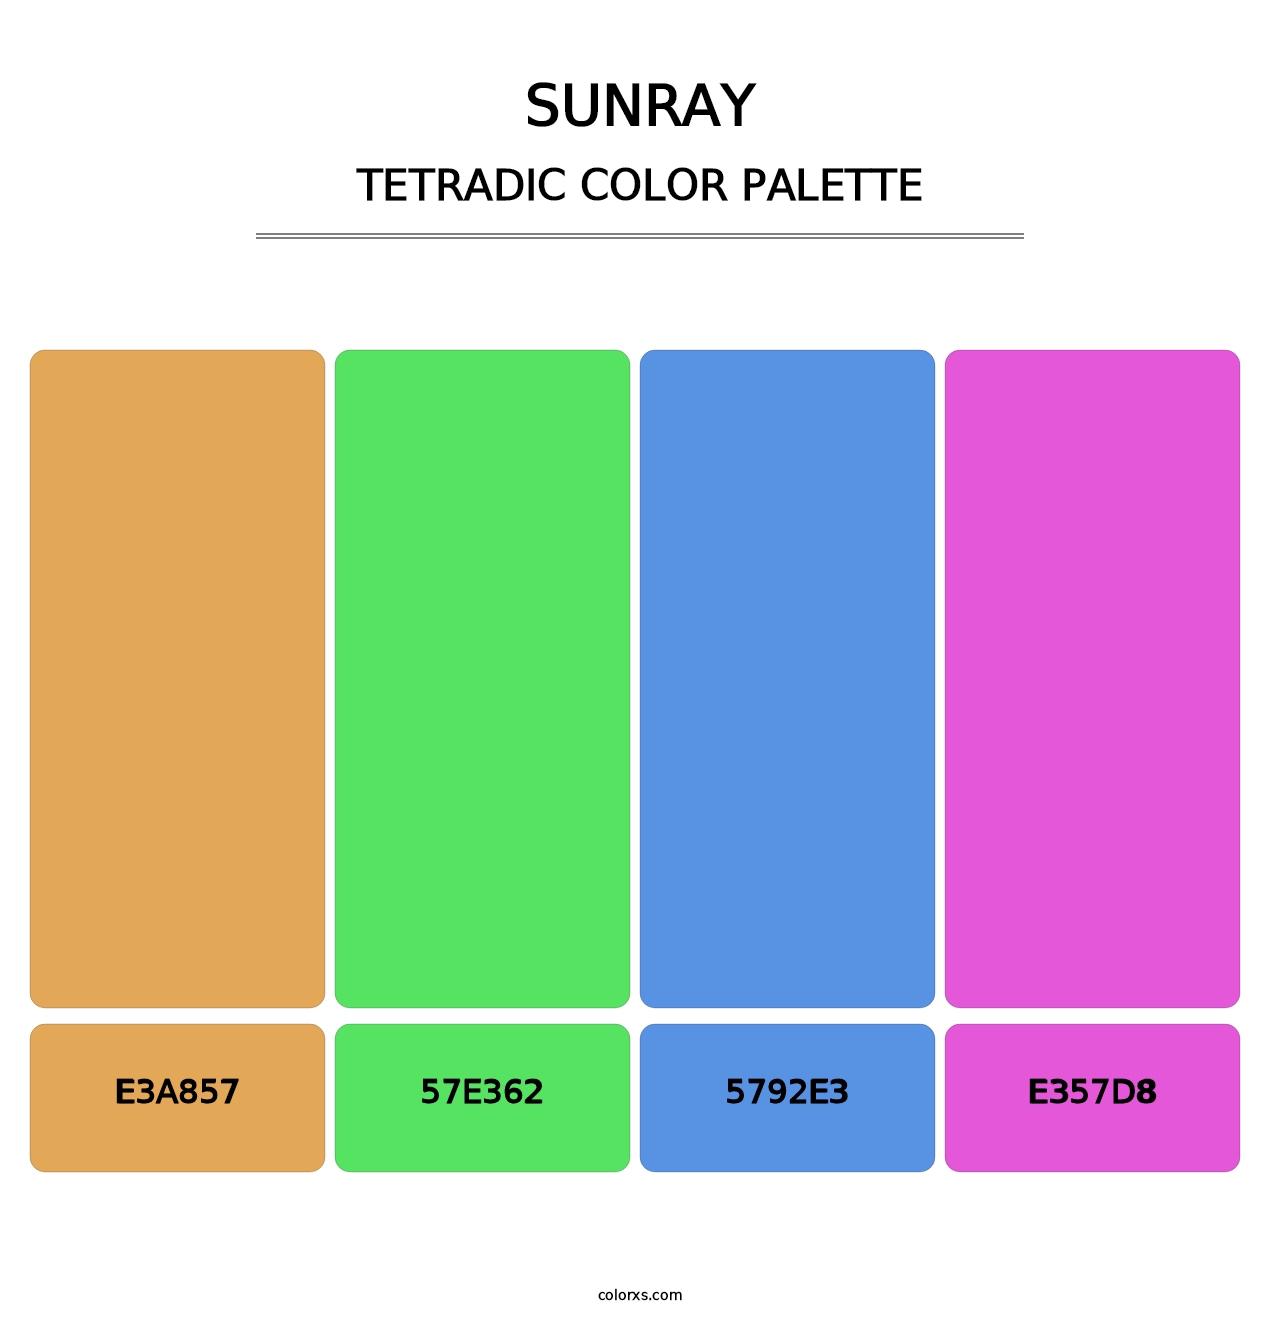 Sunray - Tetradic Color Palette